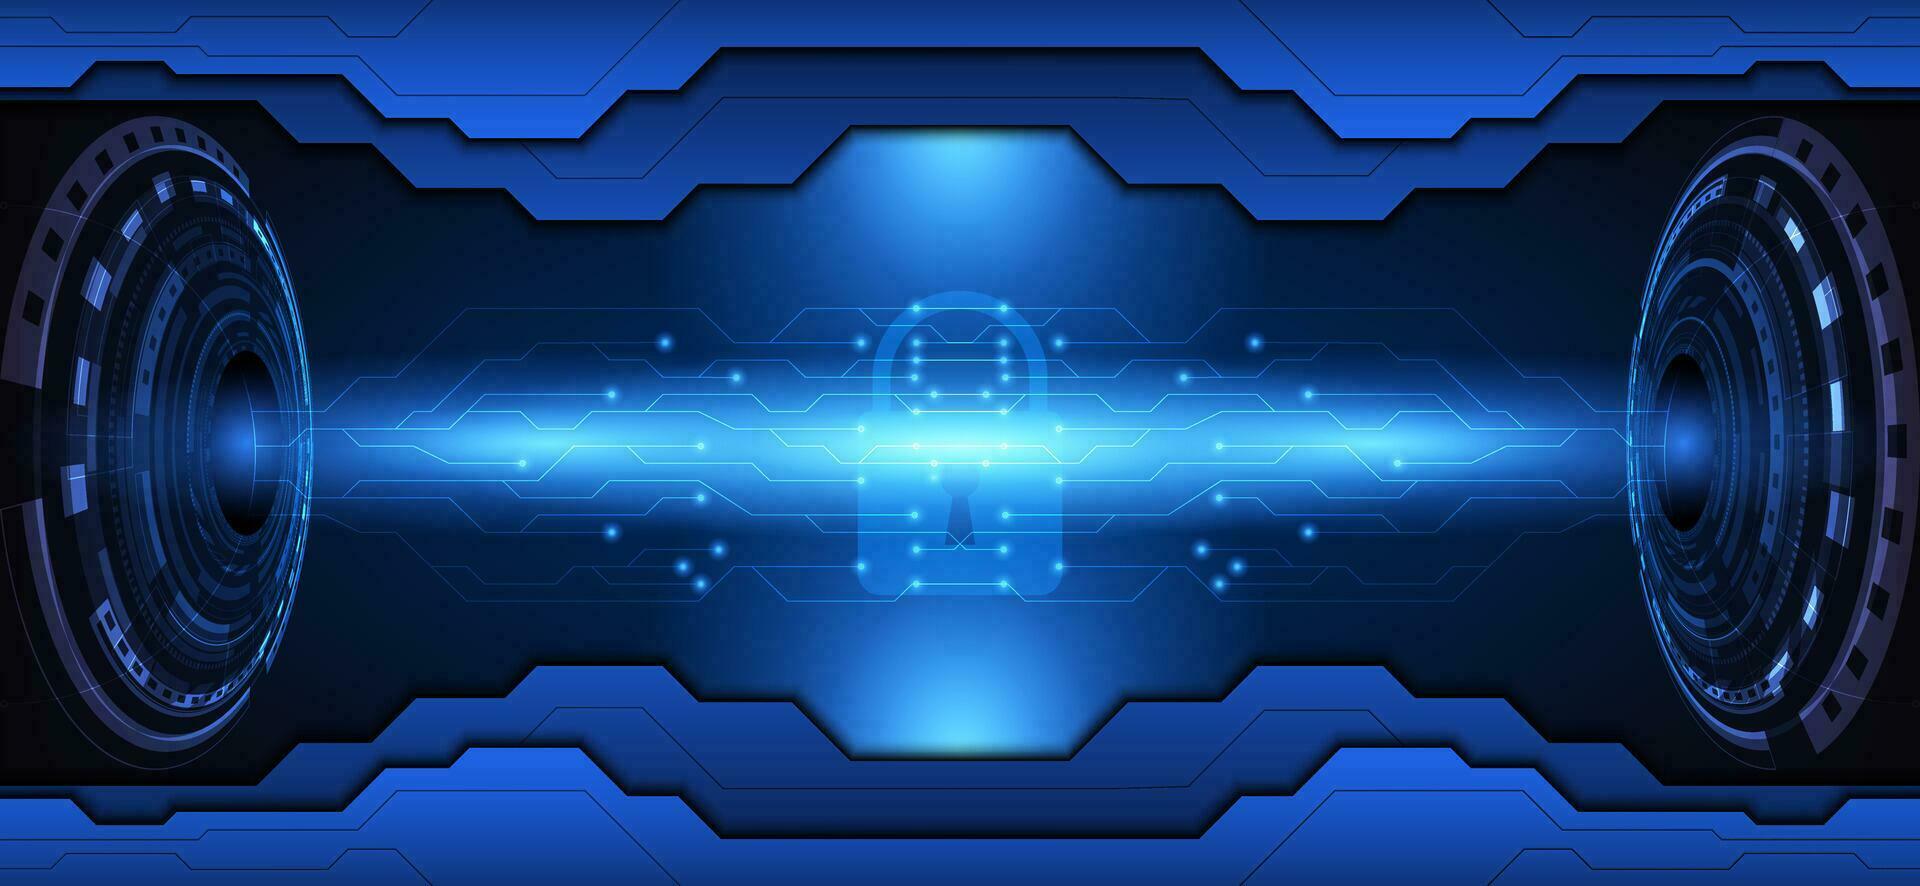 abstract technology twins circle communication padlock Hi-tech futuristic cyber security key dark blue background vector illustration